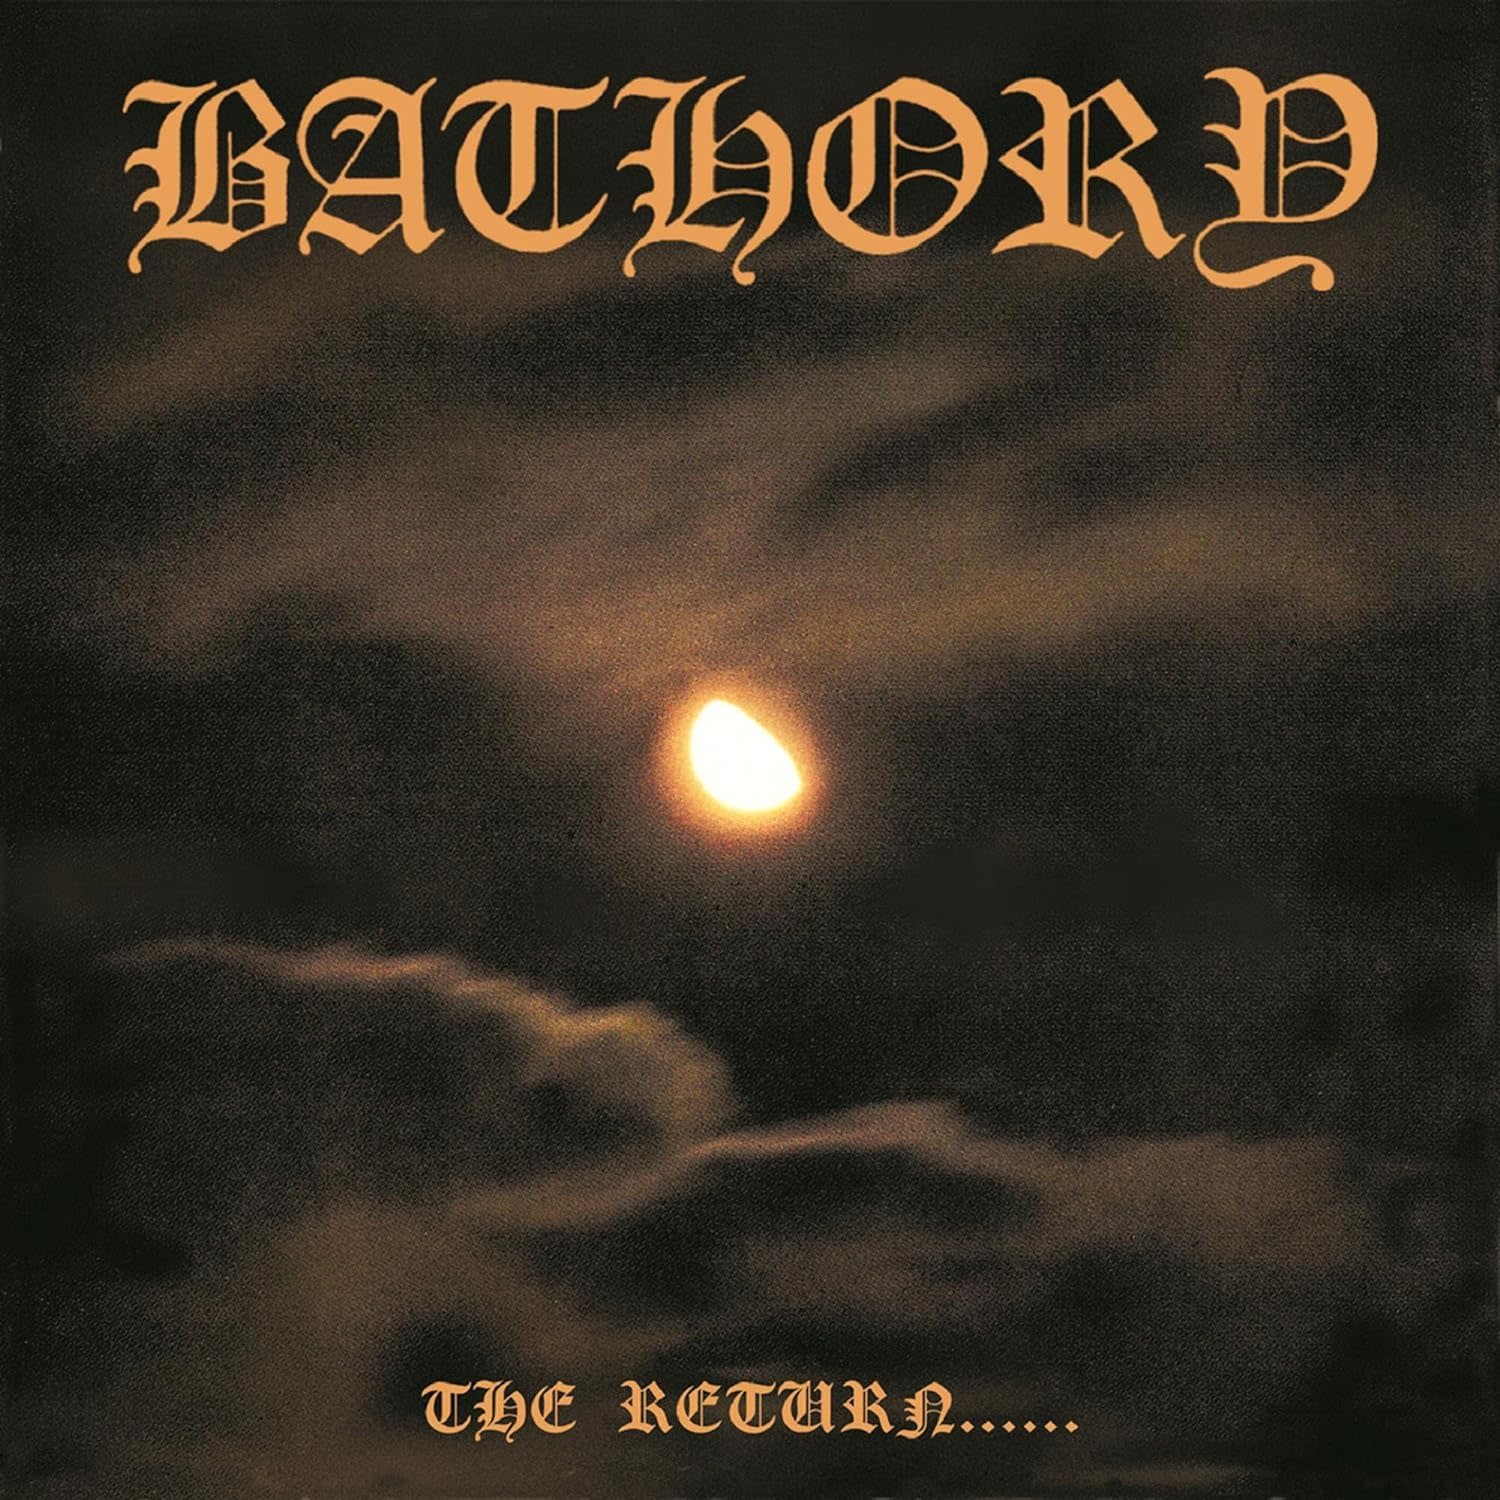 Metal Bathory - The Return...